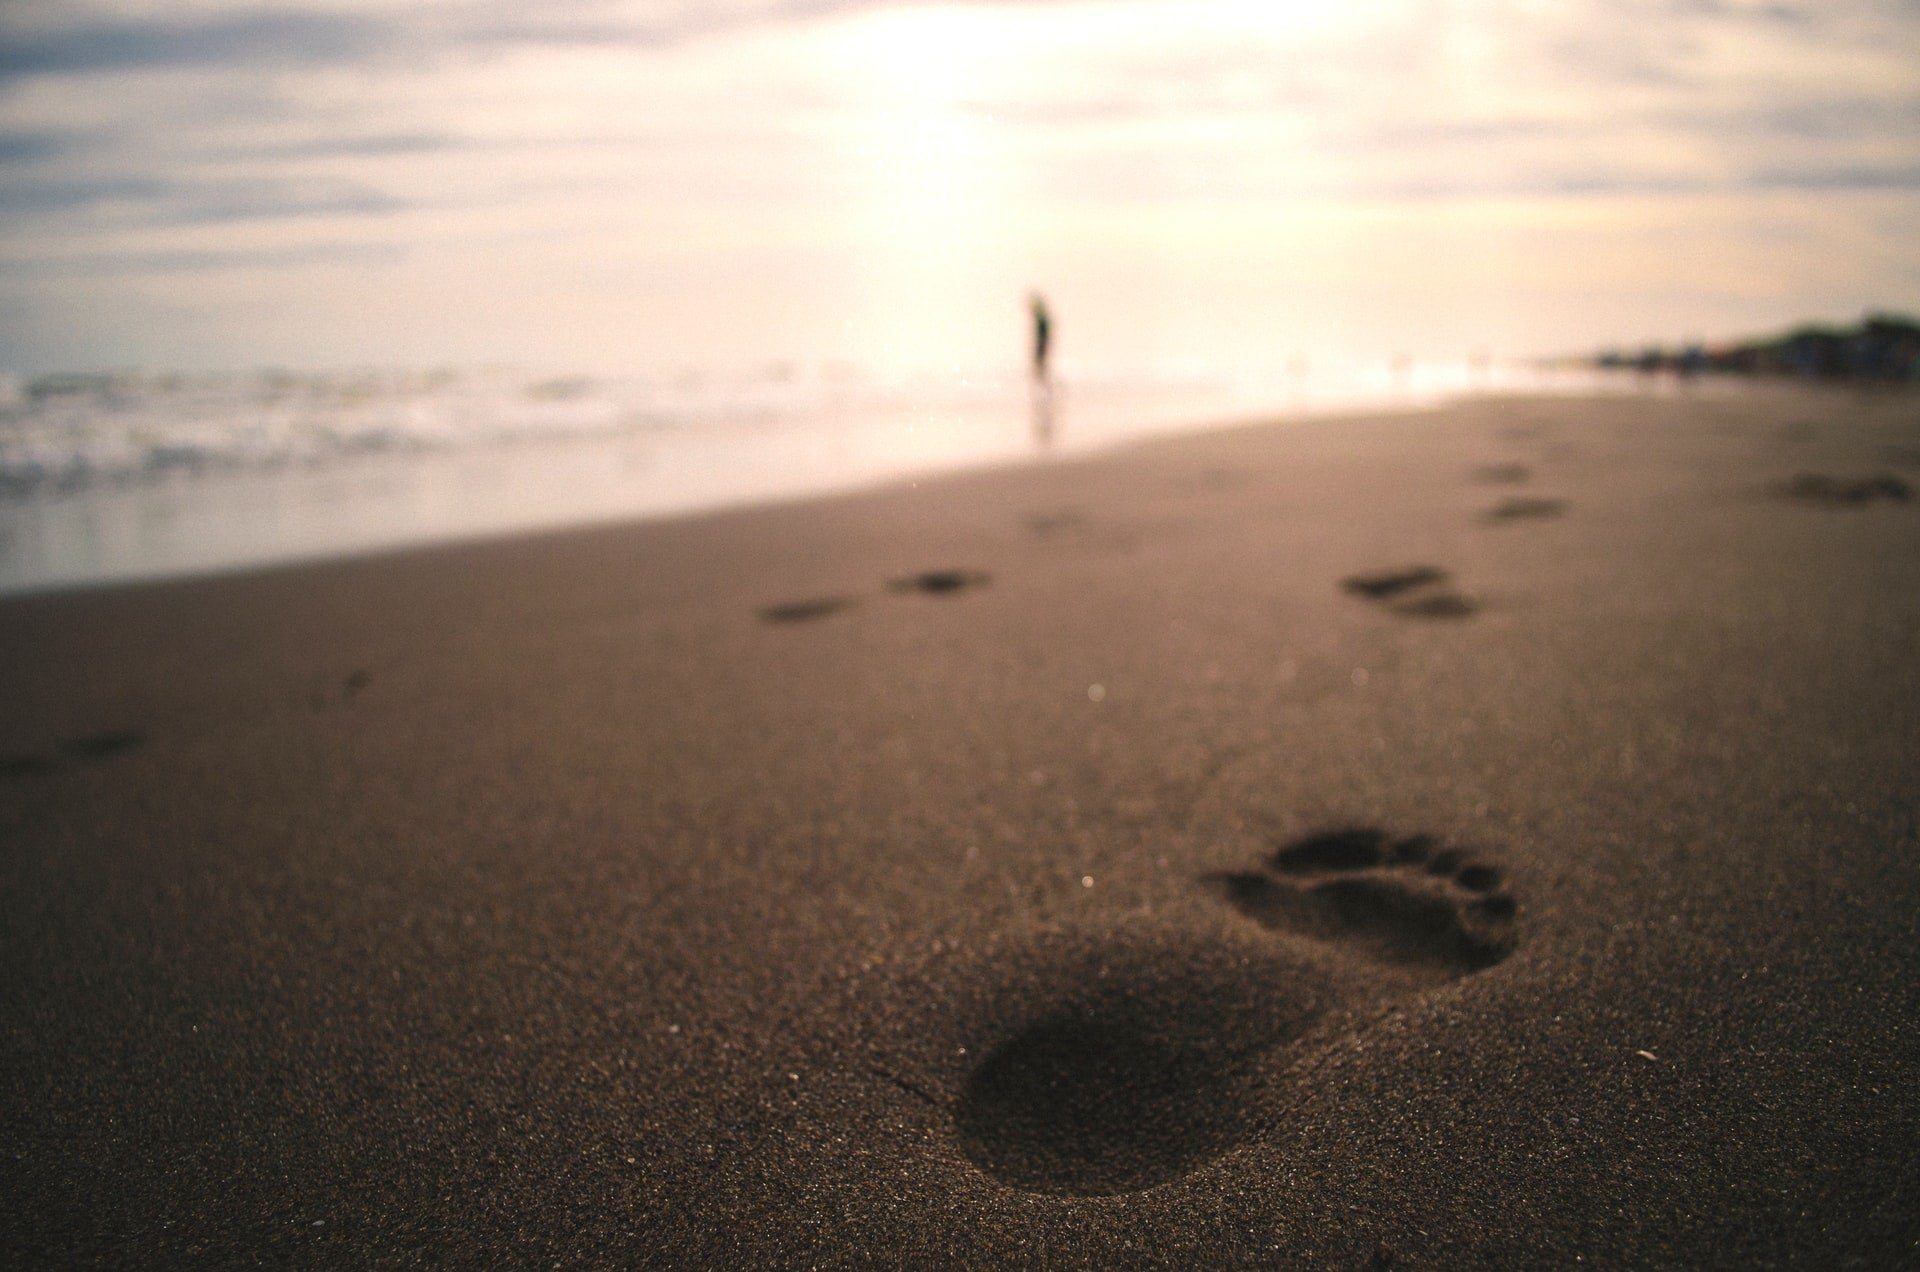 dark foreground medium brown sand with dark footprints ocean and setting sun in distance blurred human figure far away